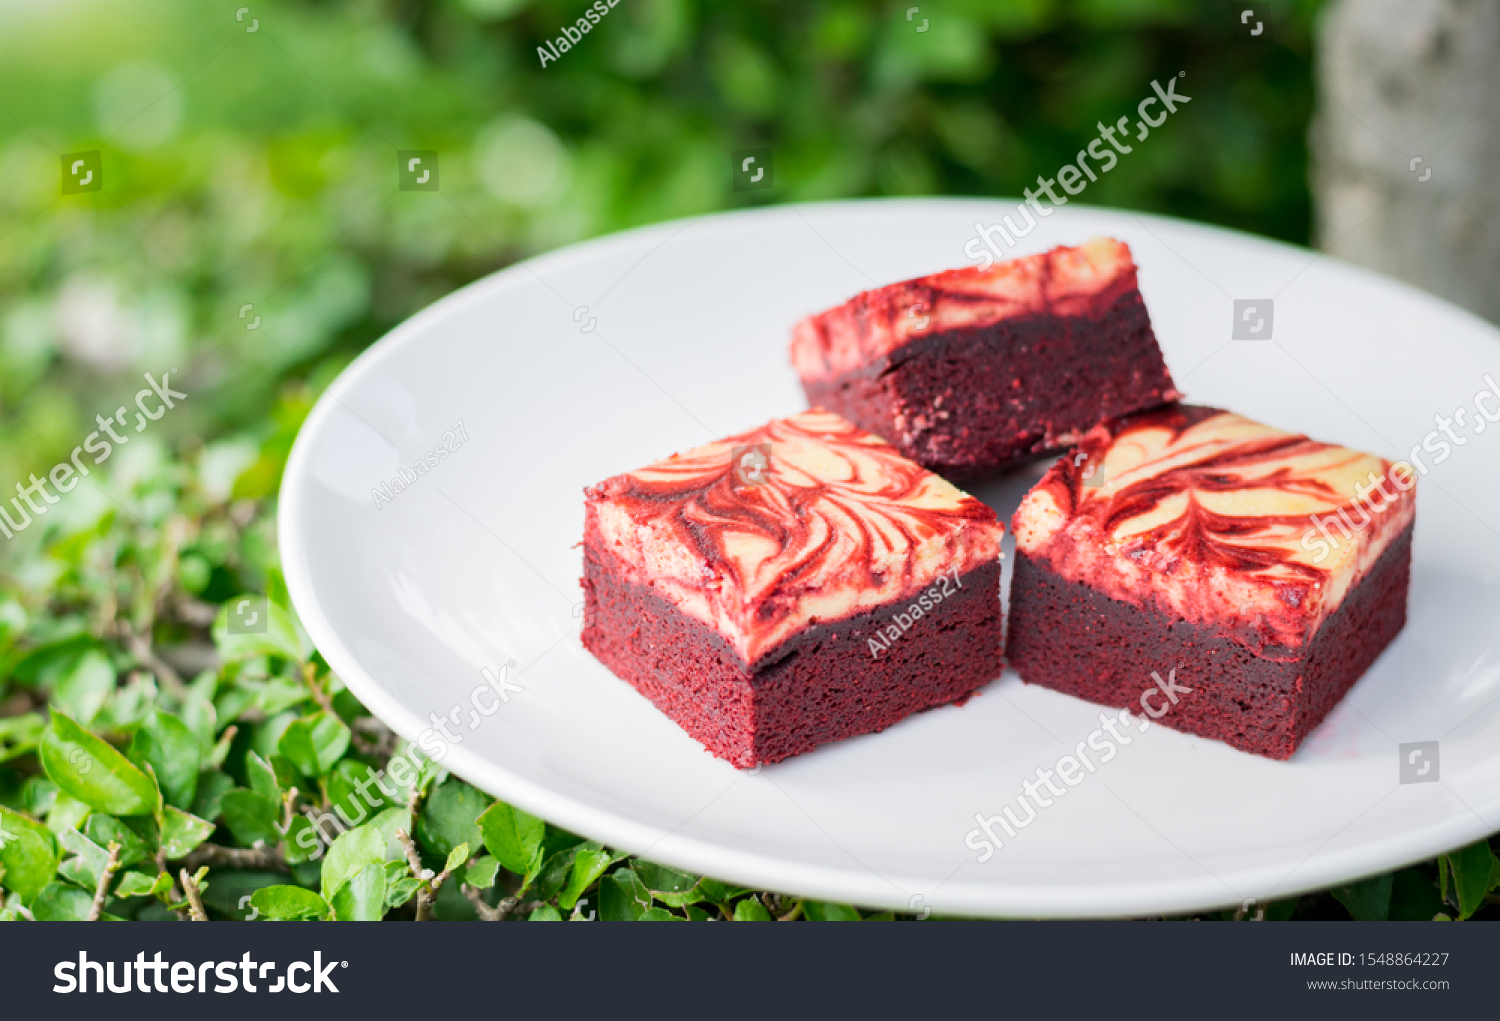 Red velvet cream cheese brownies on white dish #1548864227